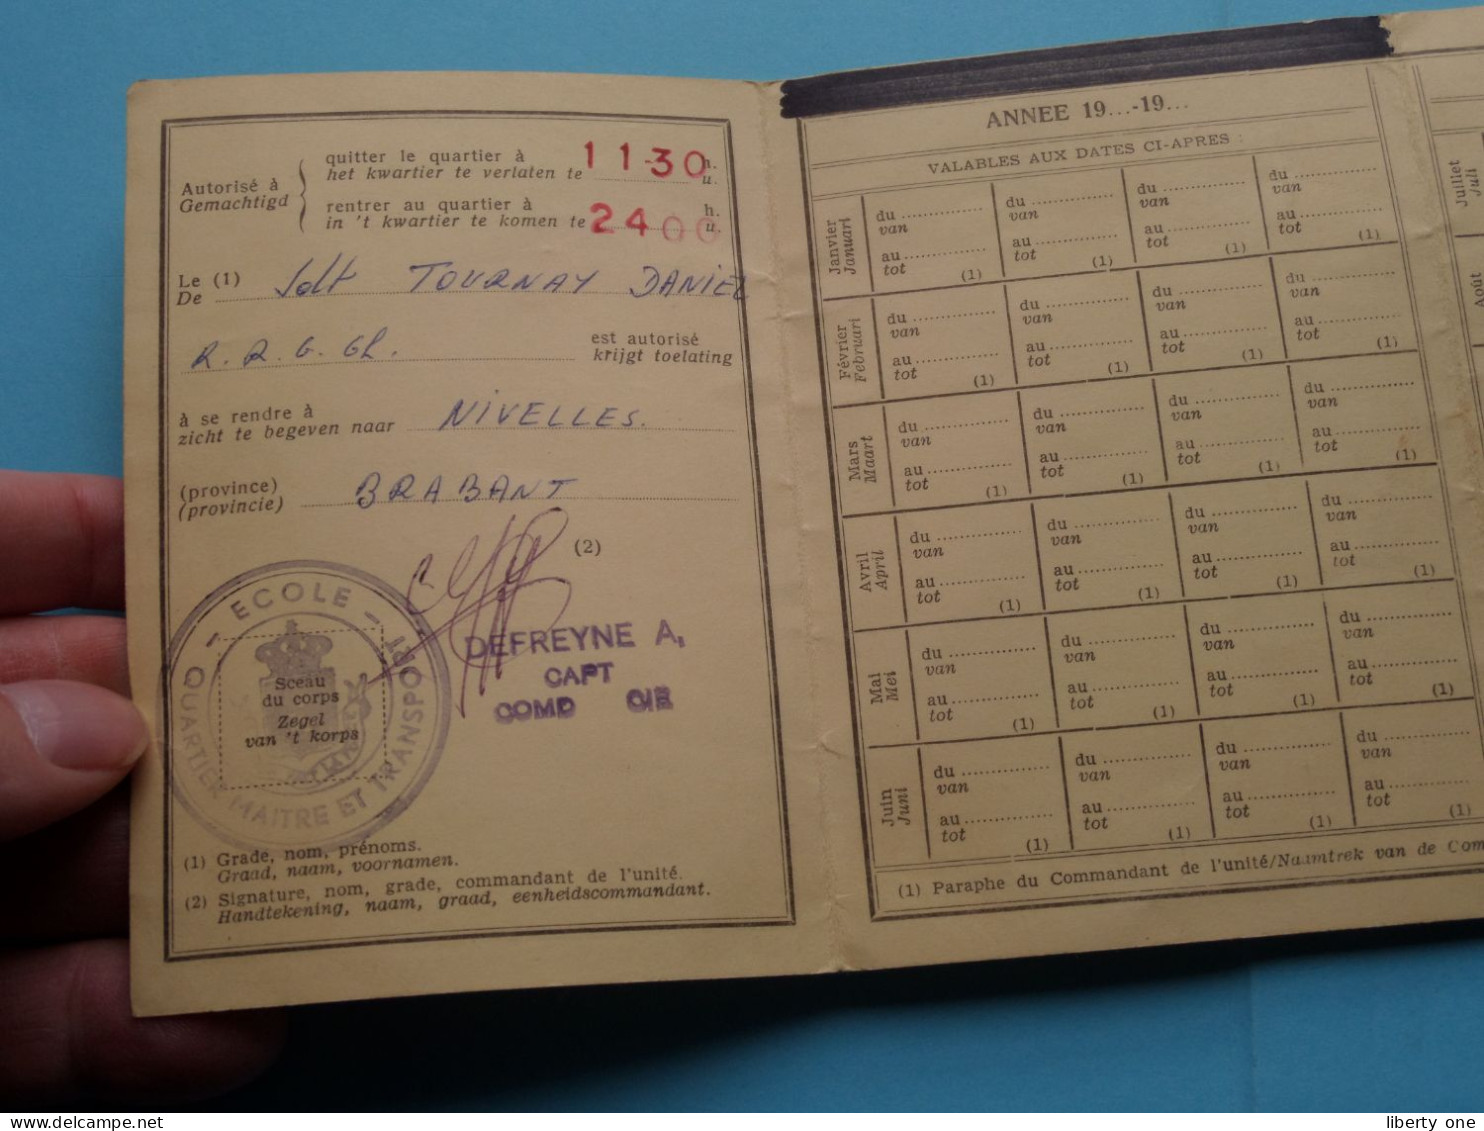 GUNSTVERLOF- En VERGUNNINGSKAART 66/37891 Nivelle ( Tournay ) 1966 ( See/Zie/voir > Scans ) ! - Documenten